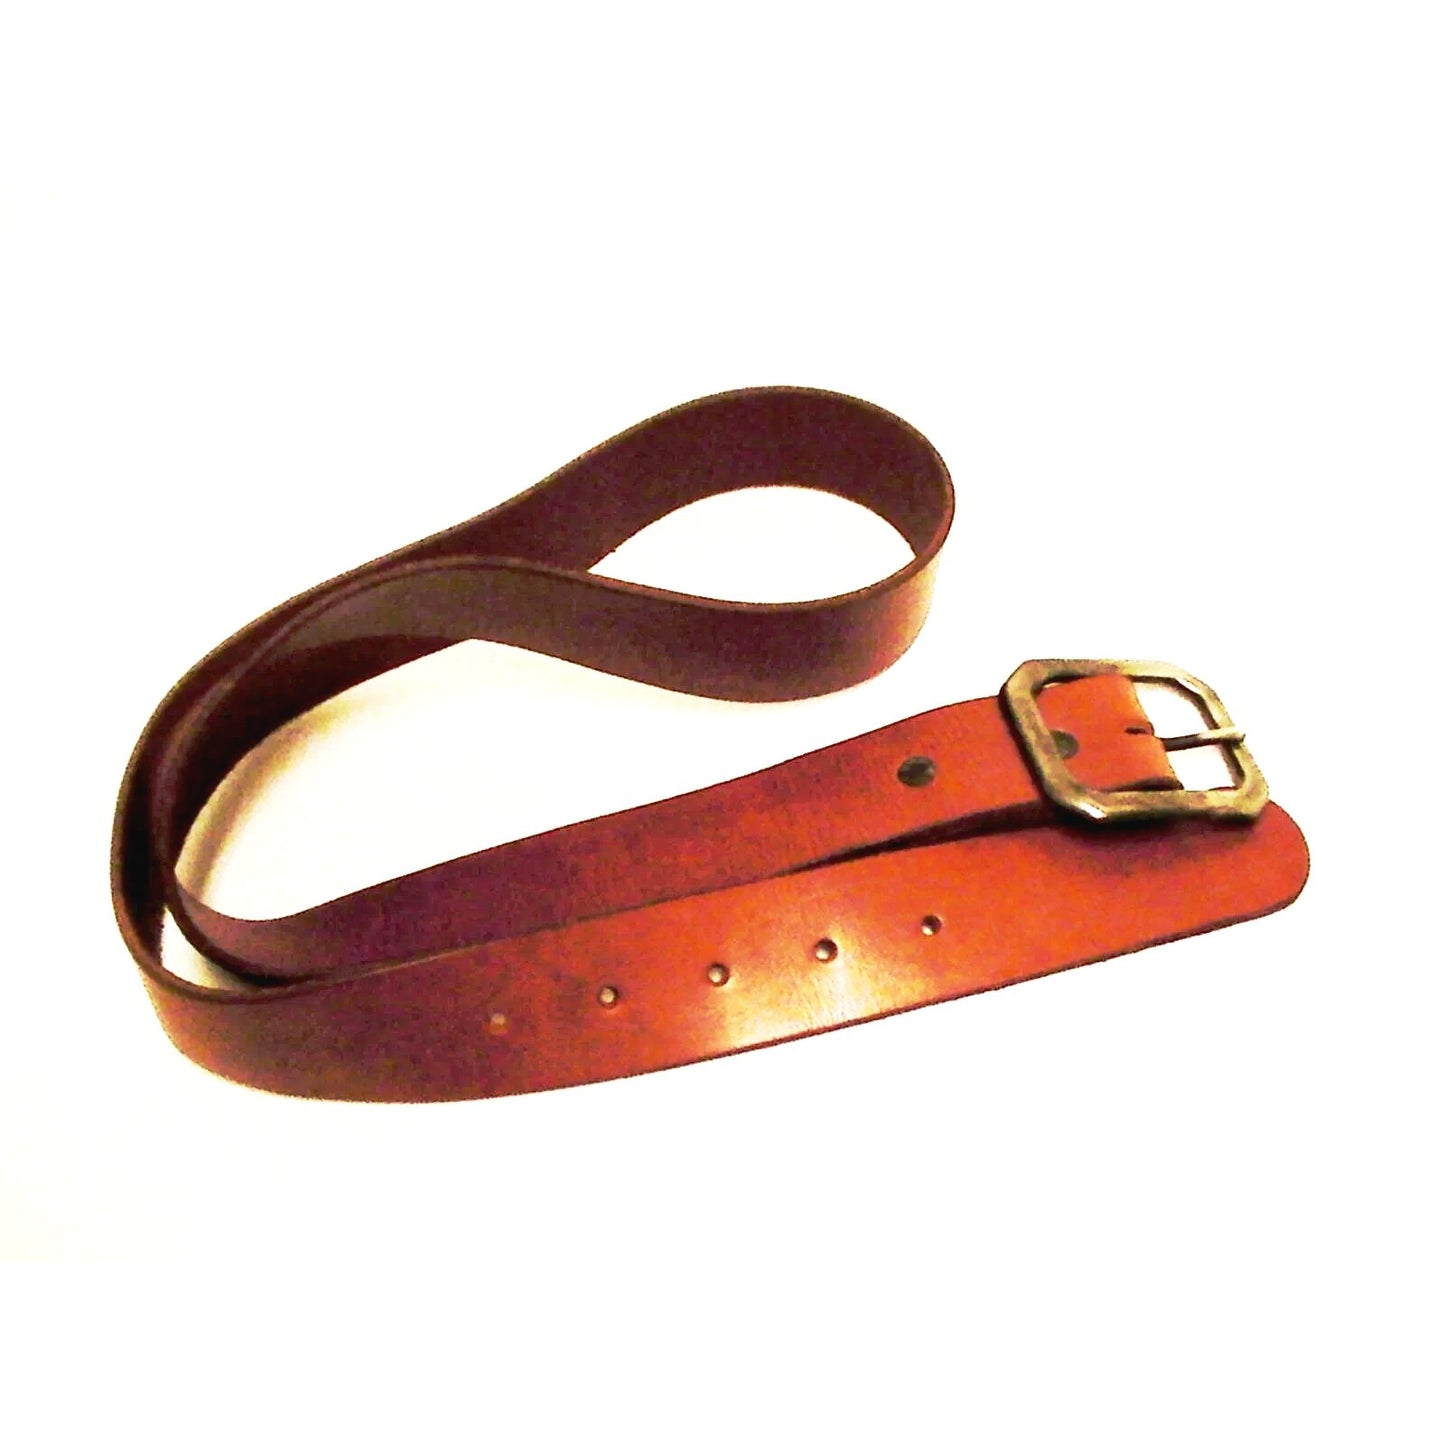 True religion genuine leather belt gunmetal buckle size 30 inch light brown new